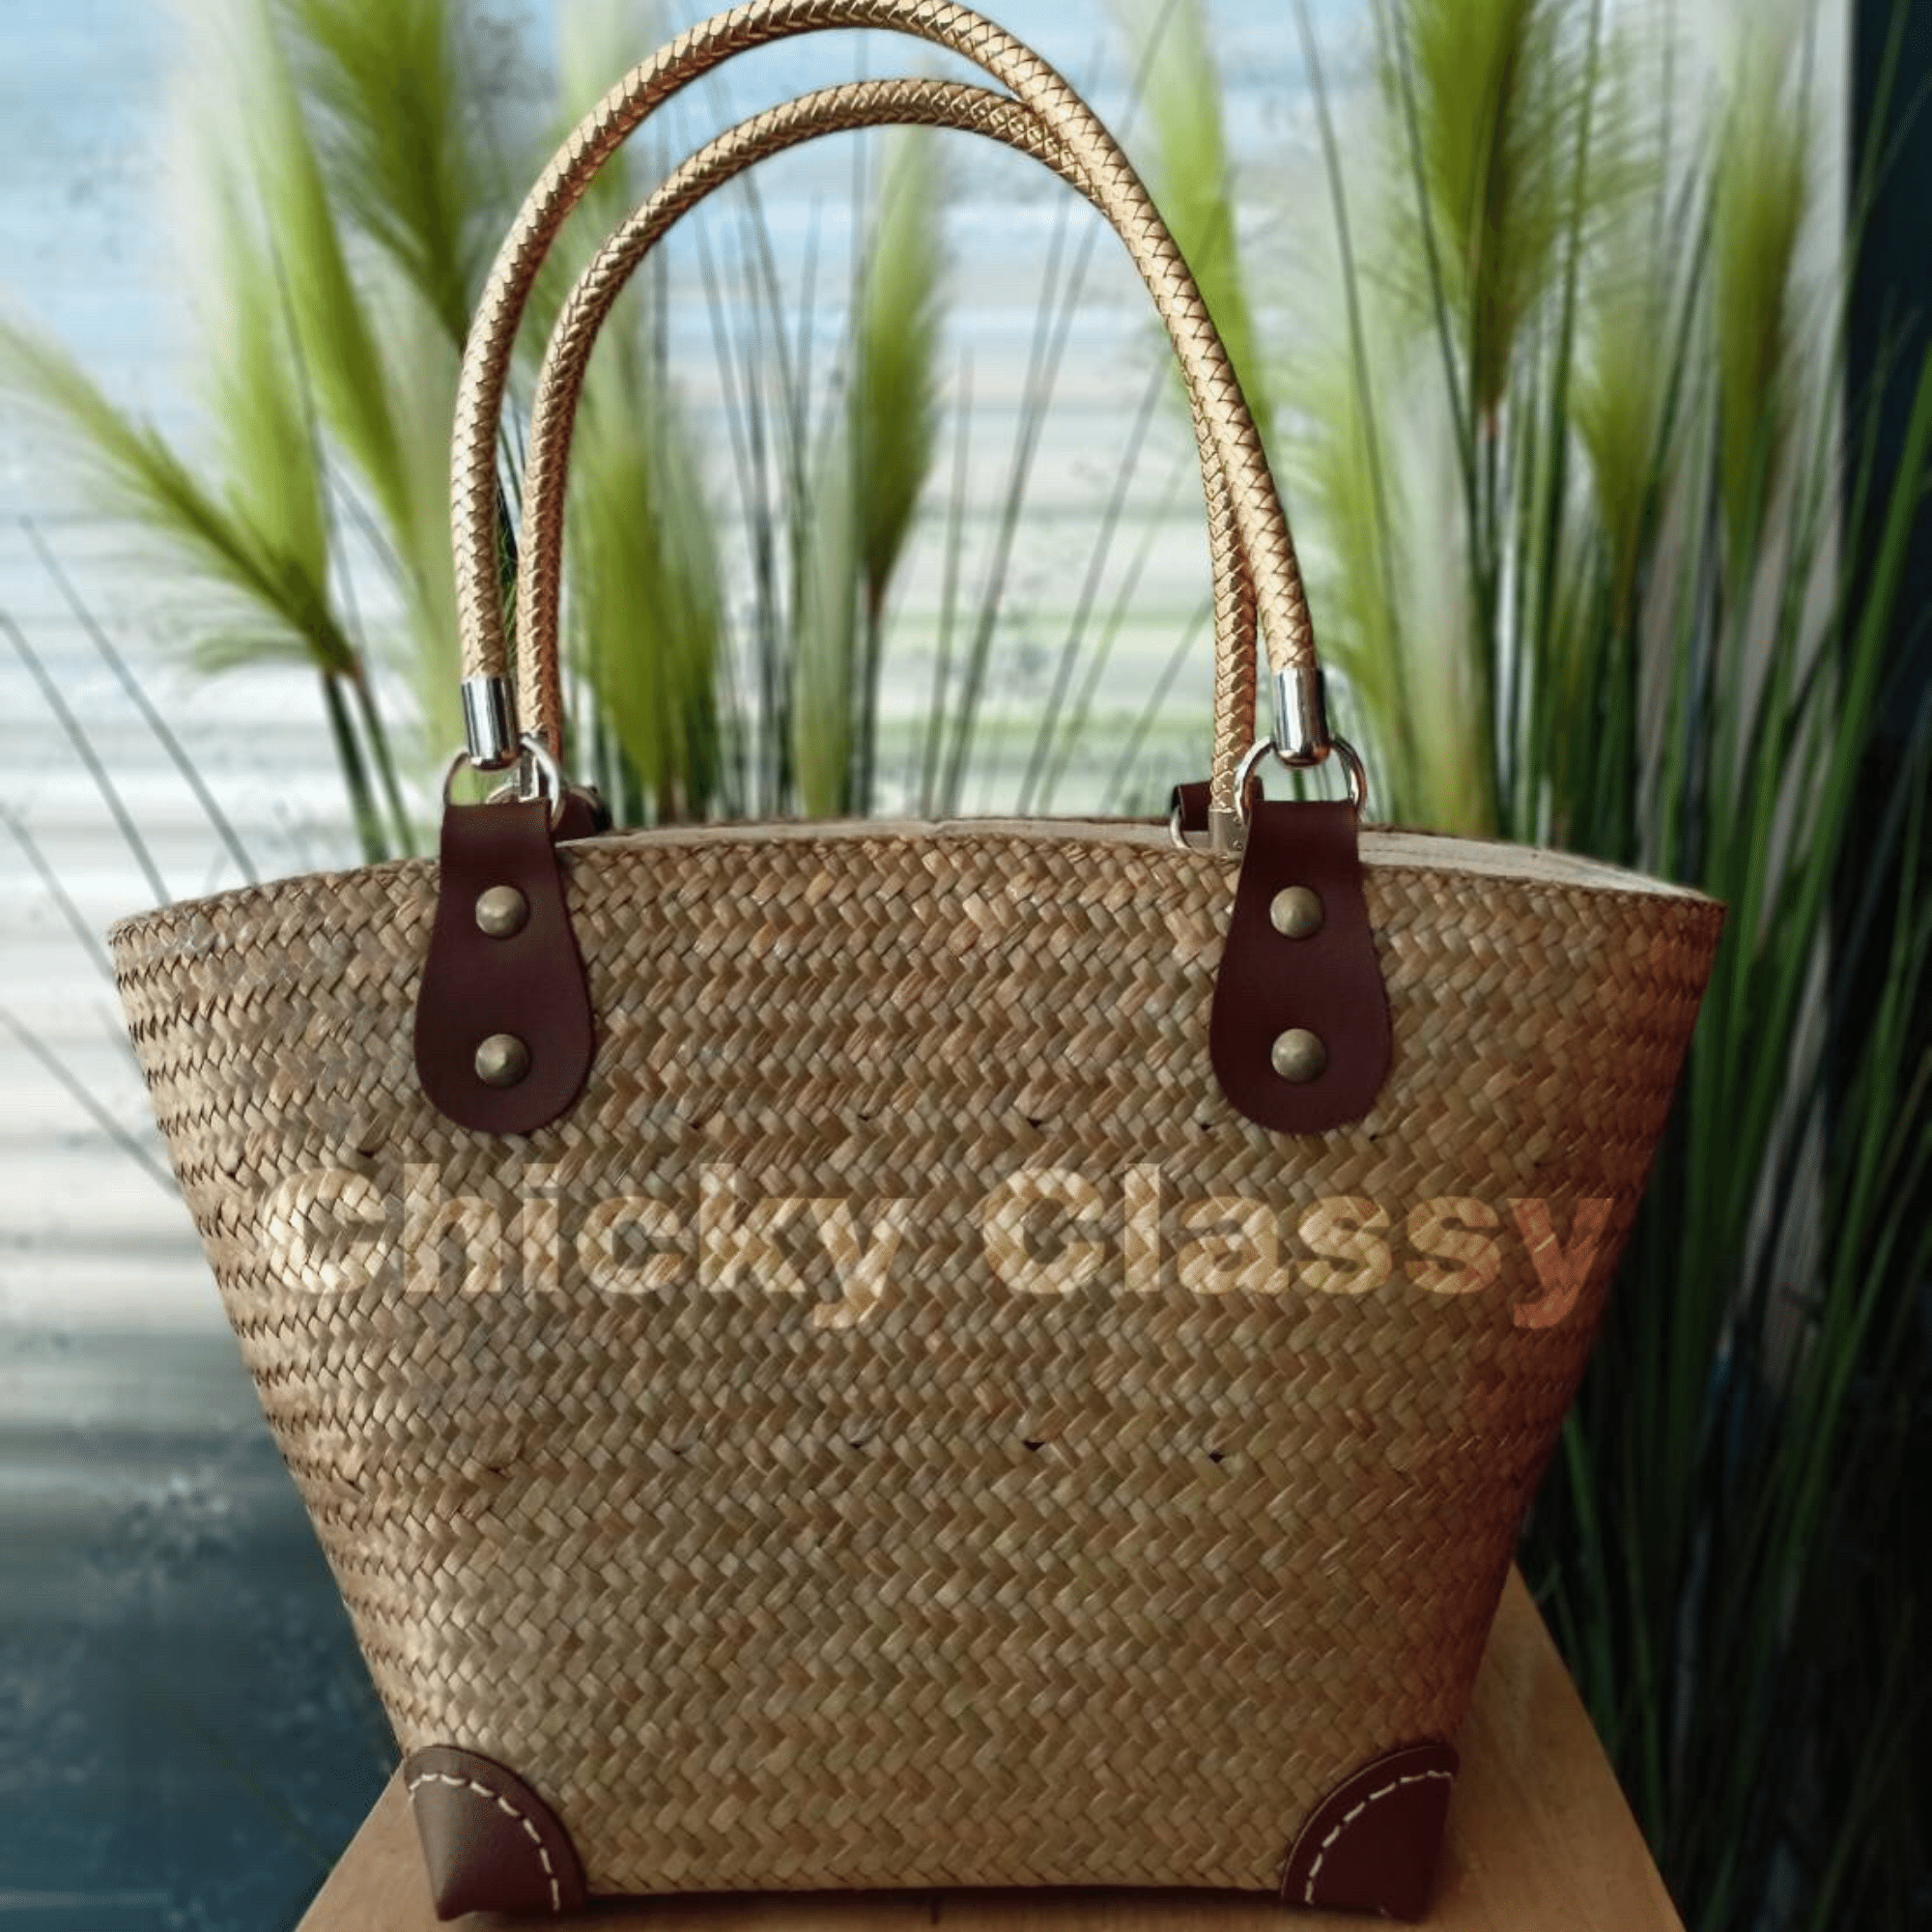 Sexy and elegant luxury straw bag. Take me anywhere